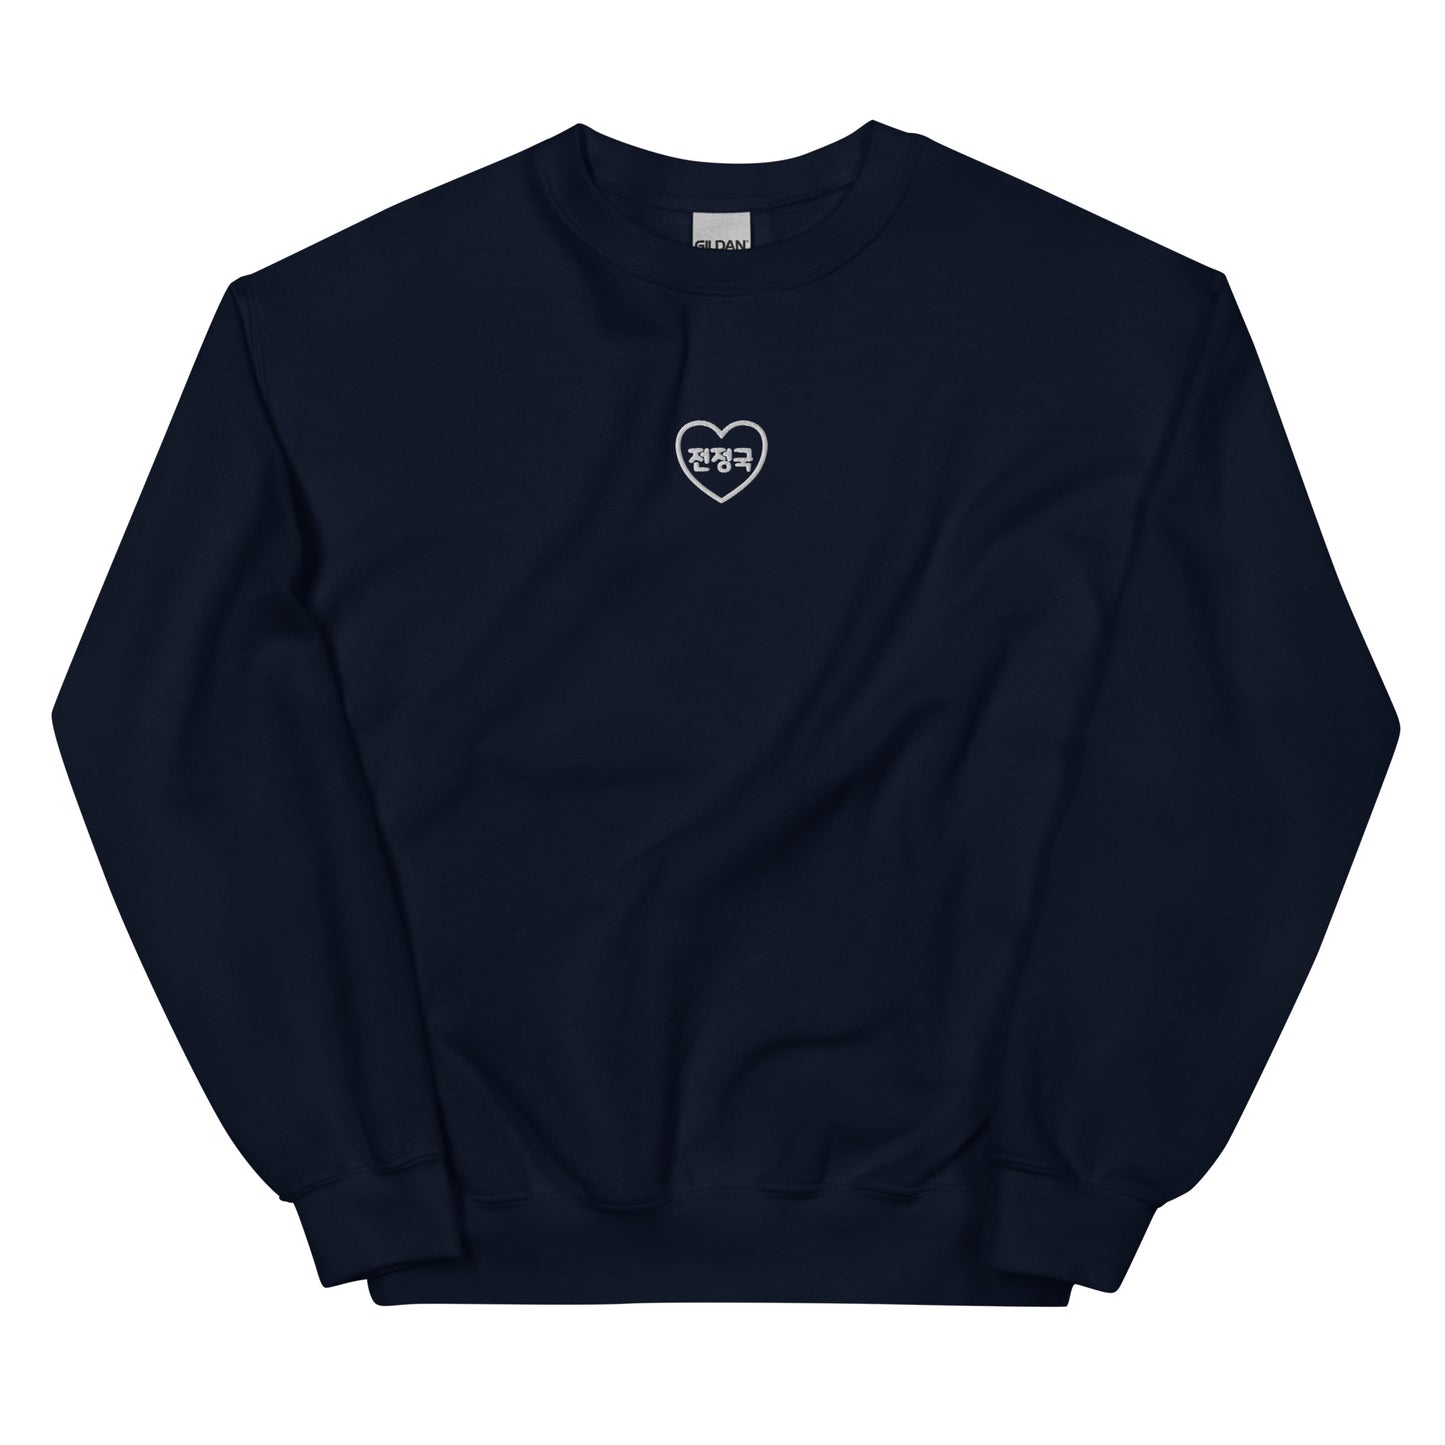 BTS Jungkook, Jeon Jung-kook in Korean Heart Embroidery Unisex Sweatshirt